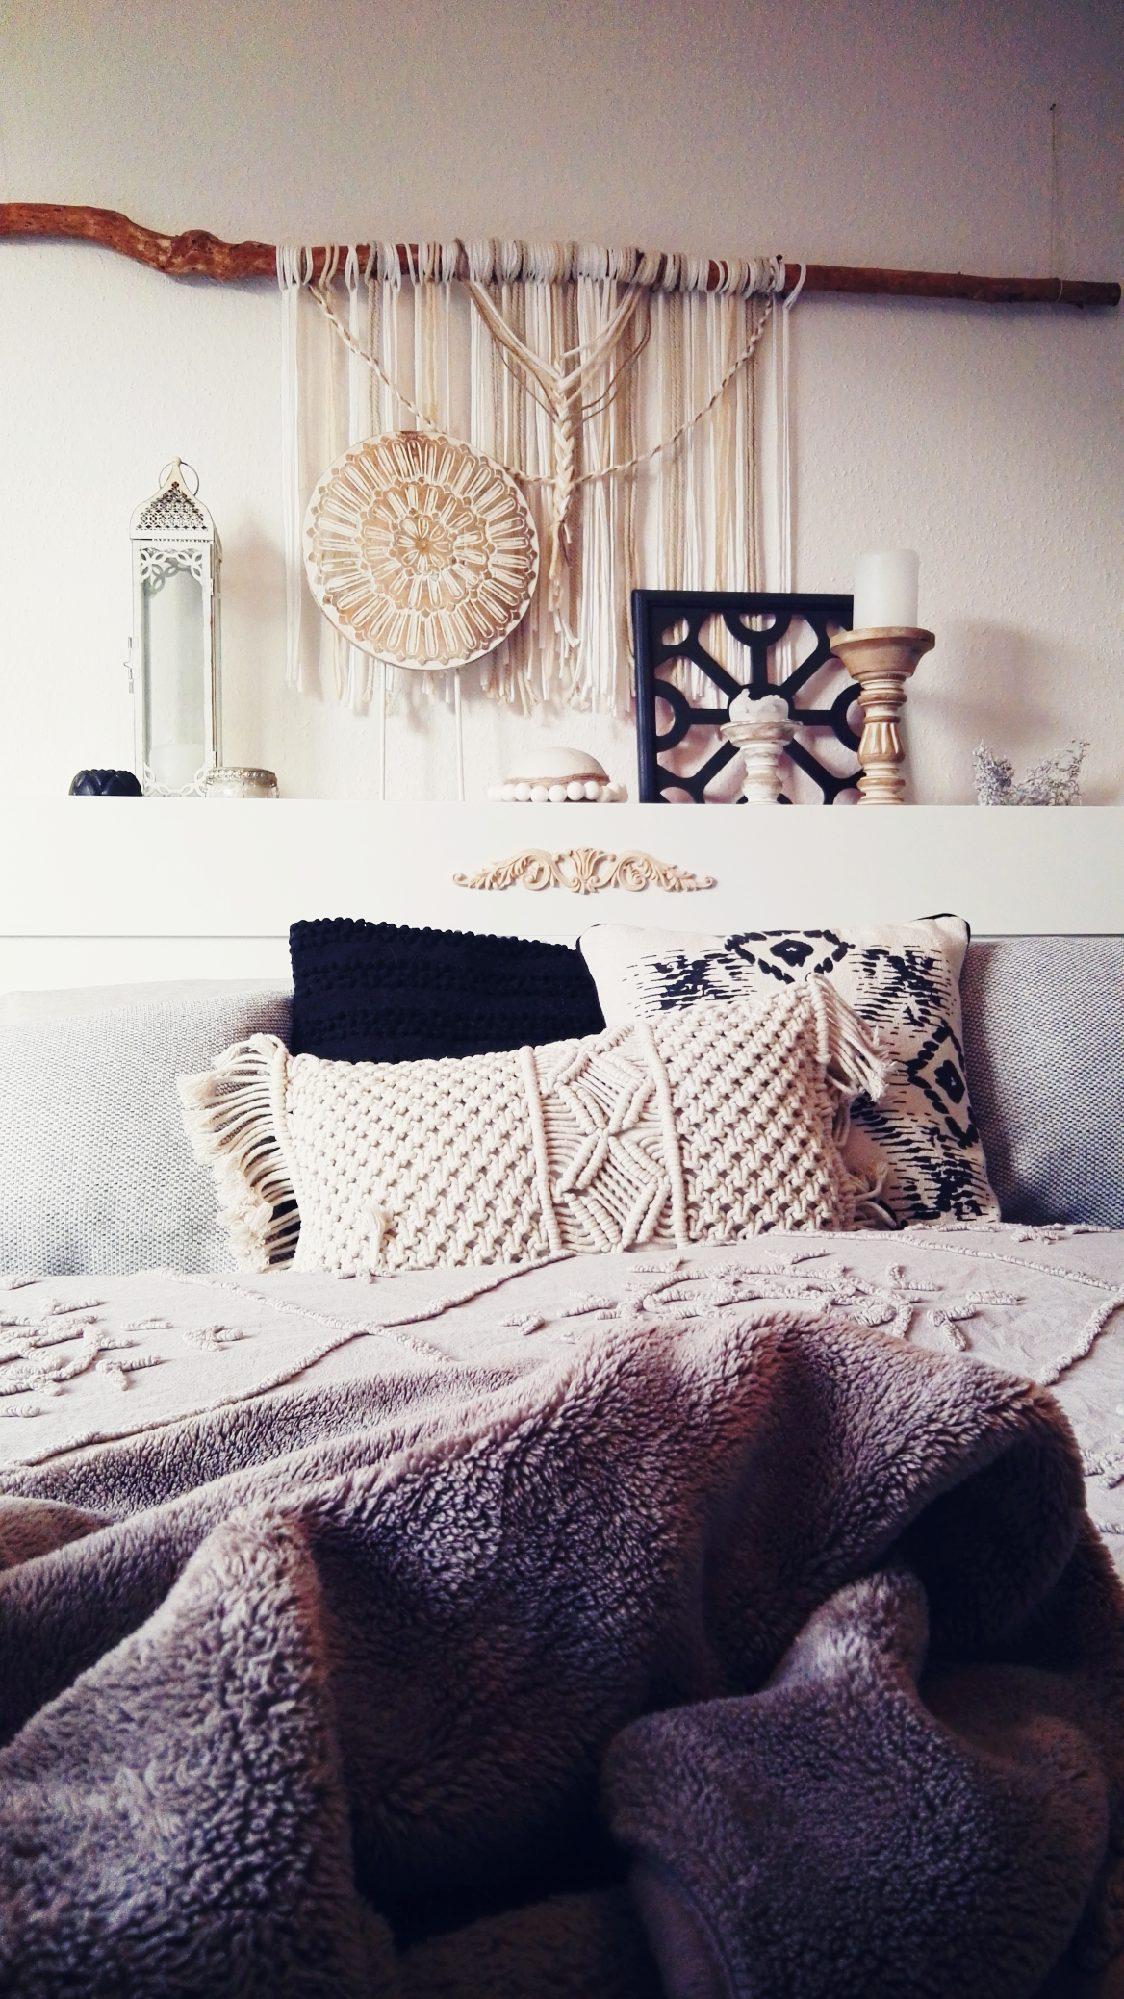 Cozy bedroom.
#scandiboho #bohostyle #whiteboho #boholove #bohemianstyle #boho #bohemian #bohochic #boheme 